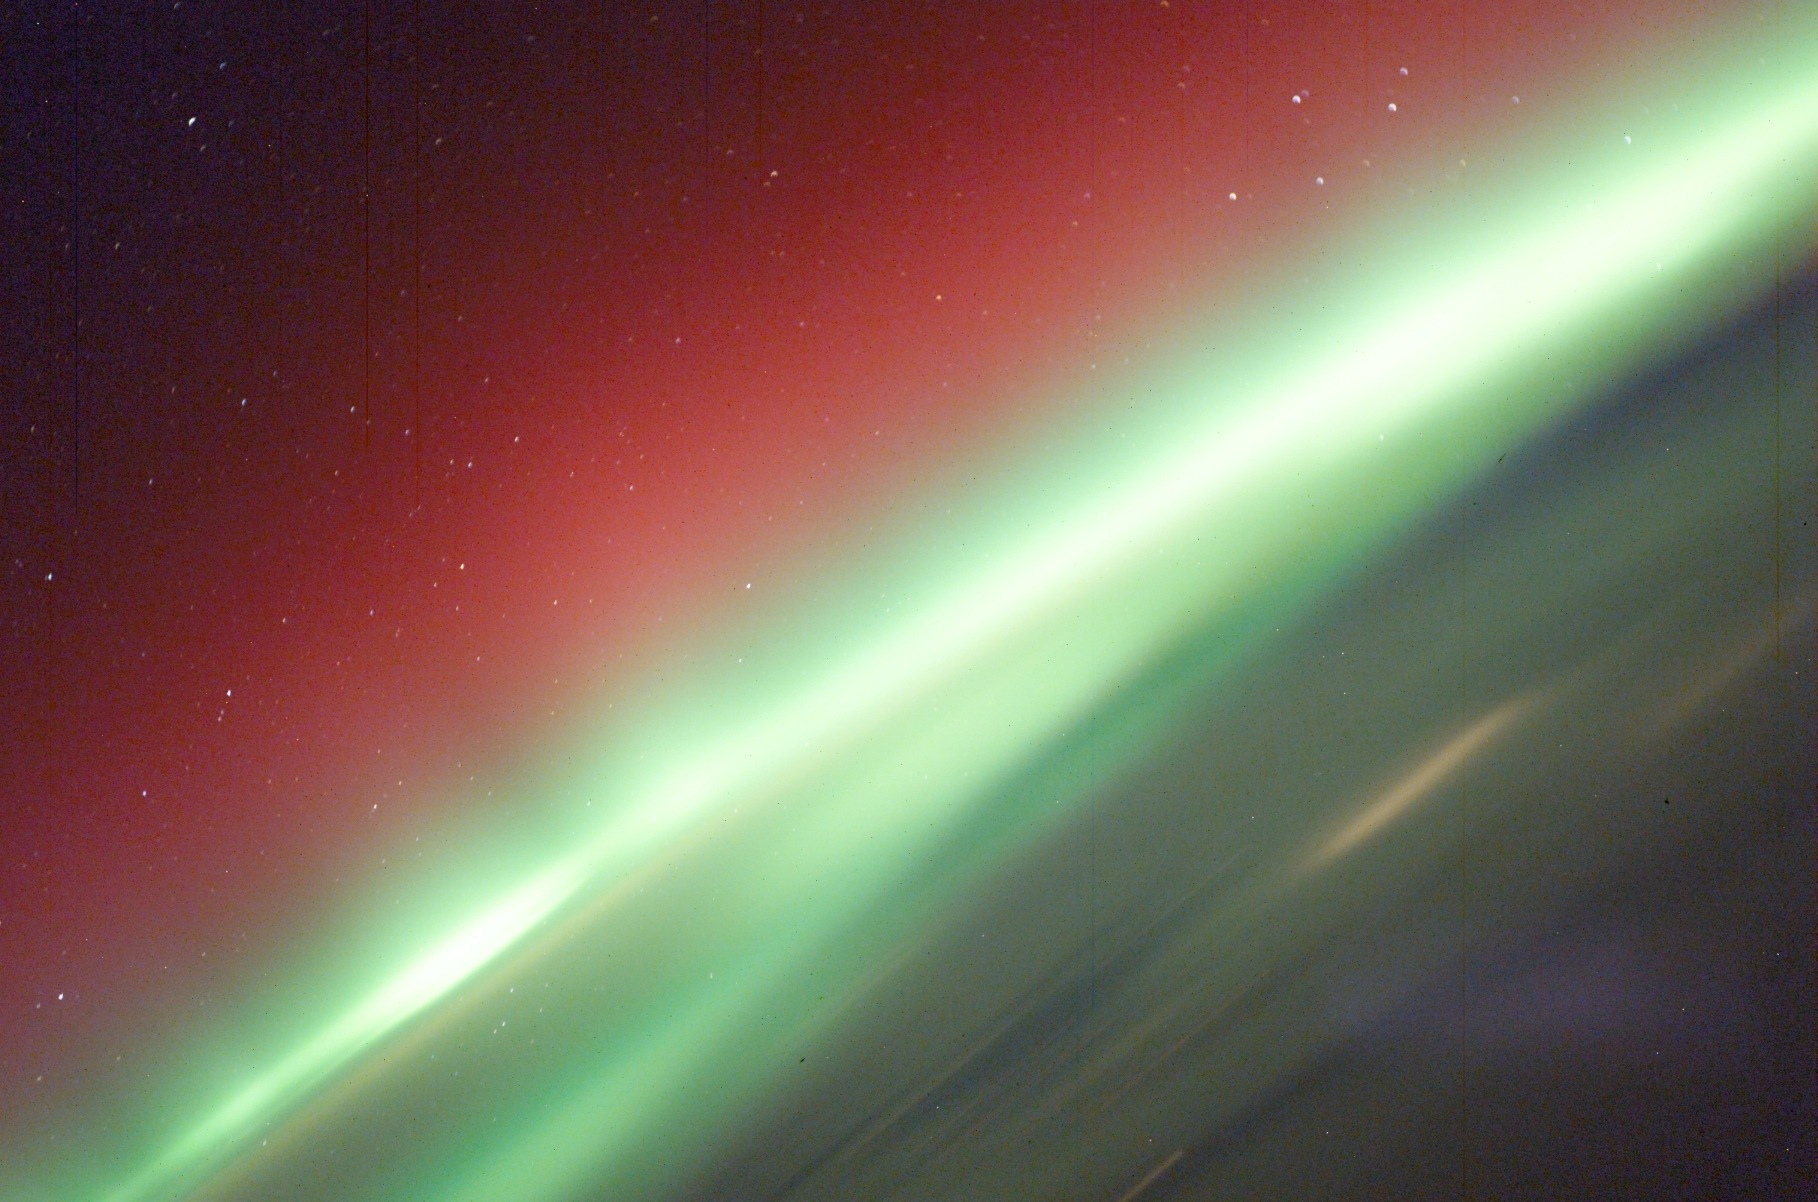 gpw-20050129-NASA-ISS006-E-41627-Aurora-Borealis-red-and-green-20030330-medium.jpg